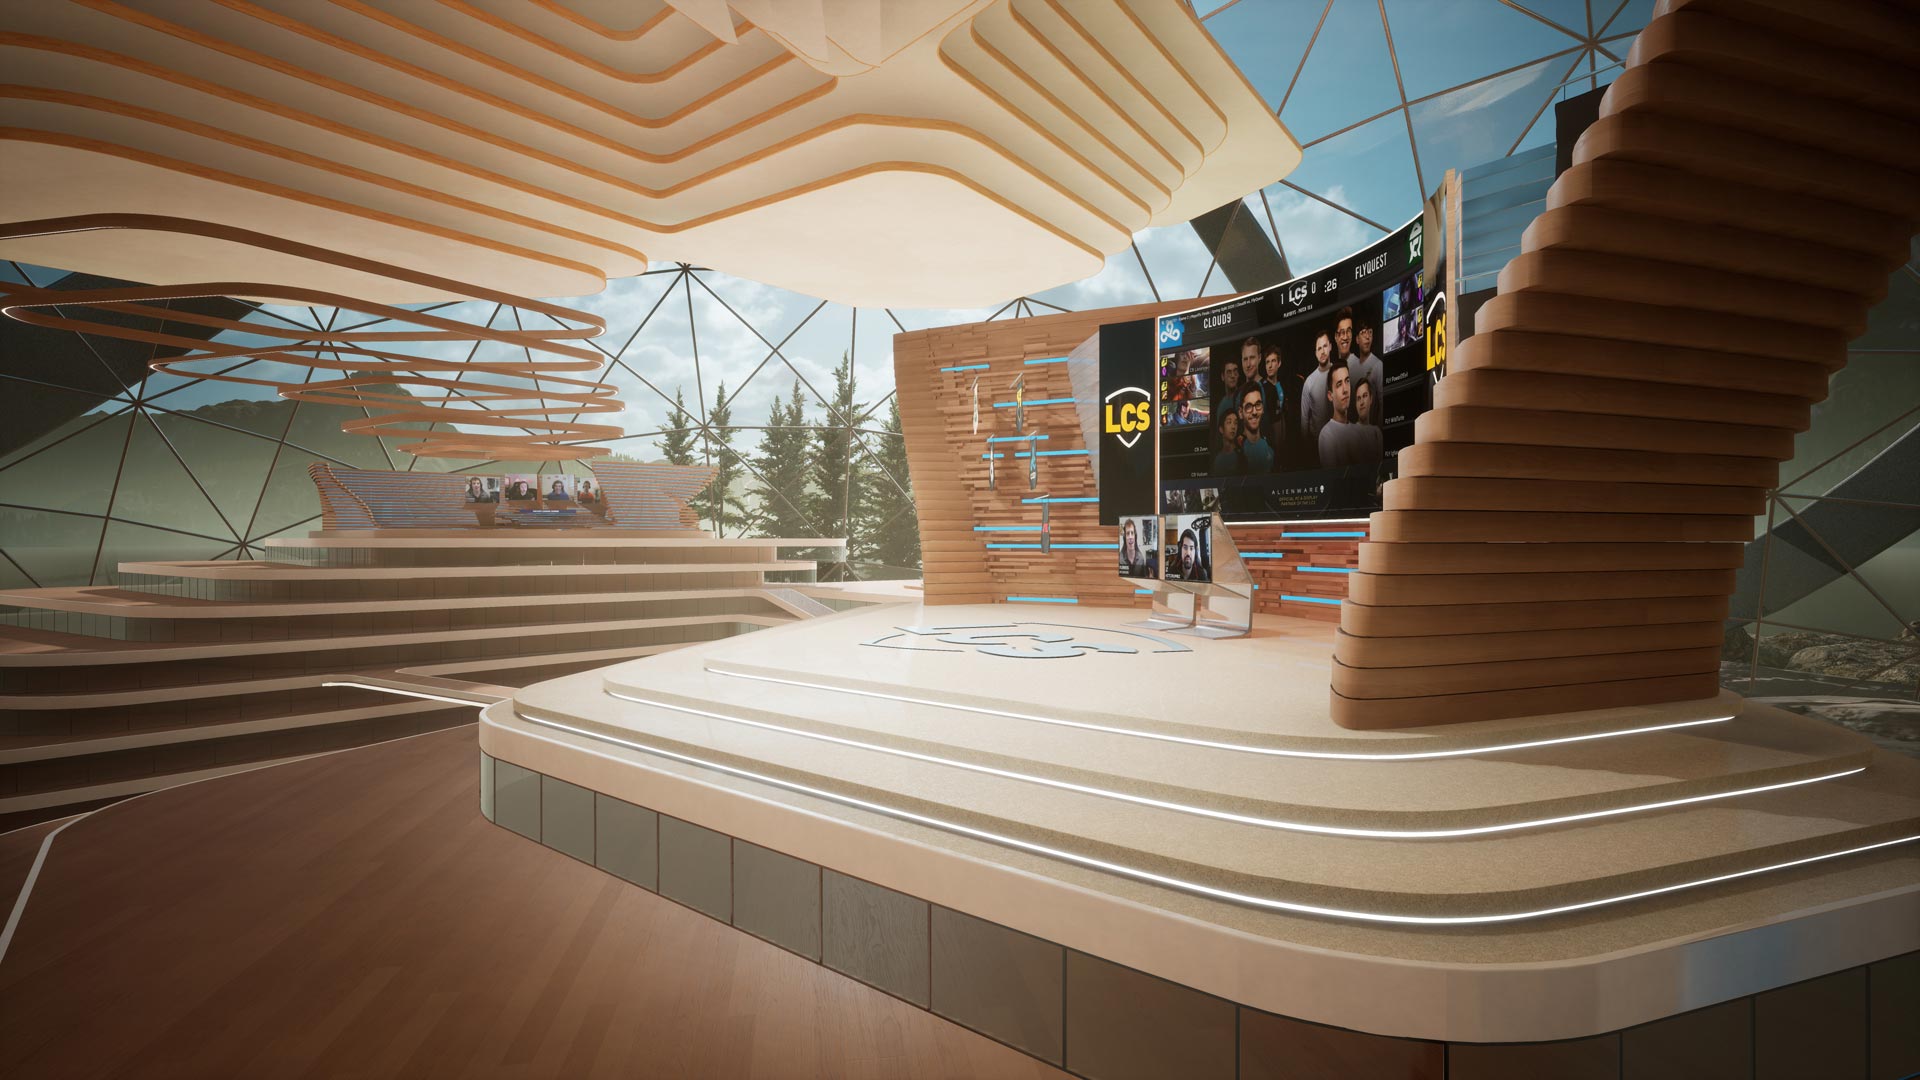 How Immersive Design Studios built a virtual dome for esports